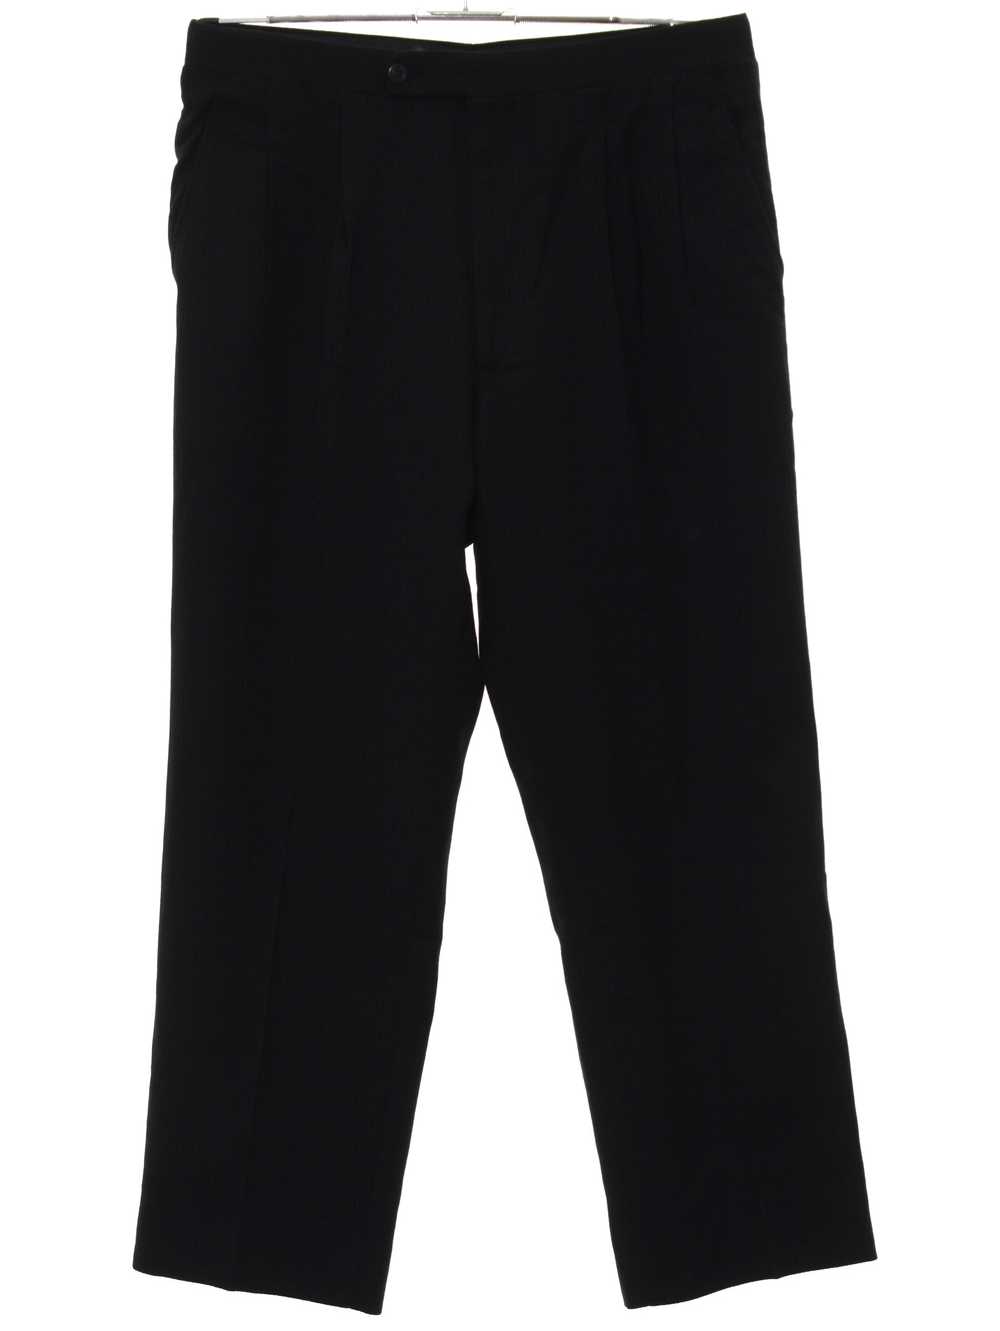 1980's Mens Black Tuxedo Pants - image 1